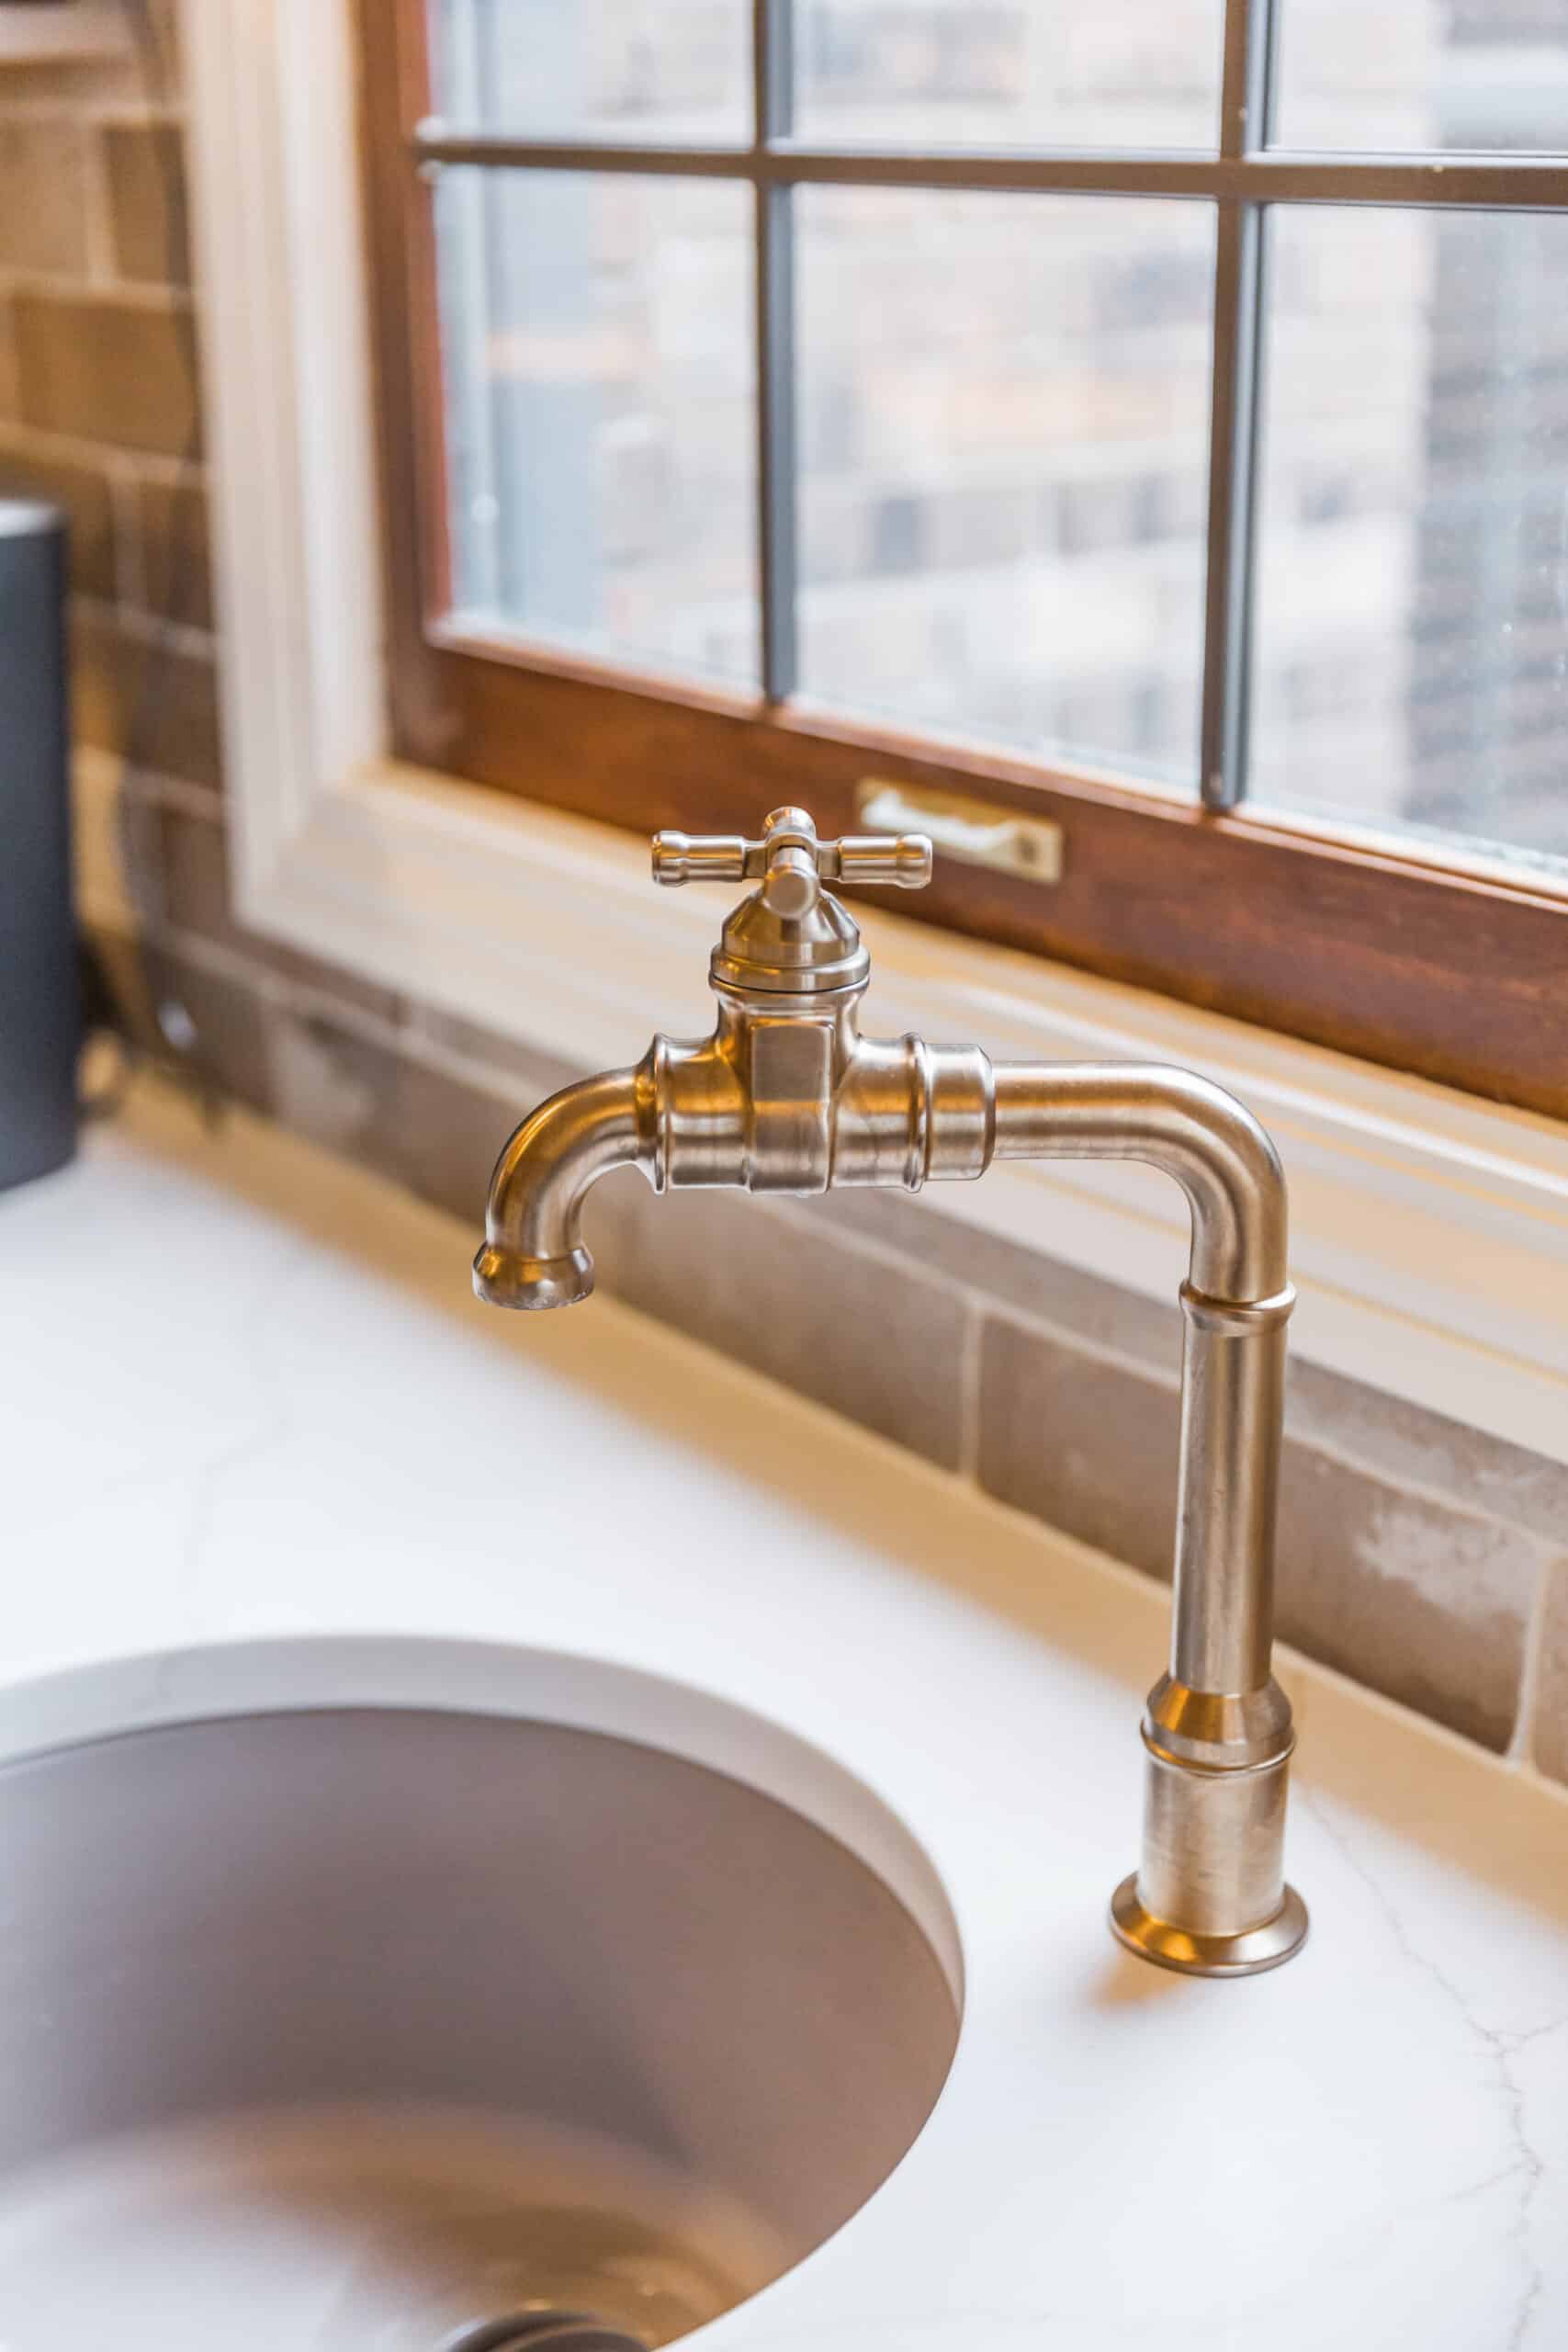 Nicholas Design Build | Vintage-style brass faucet over a sink near a window.